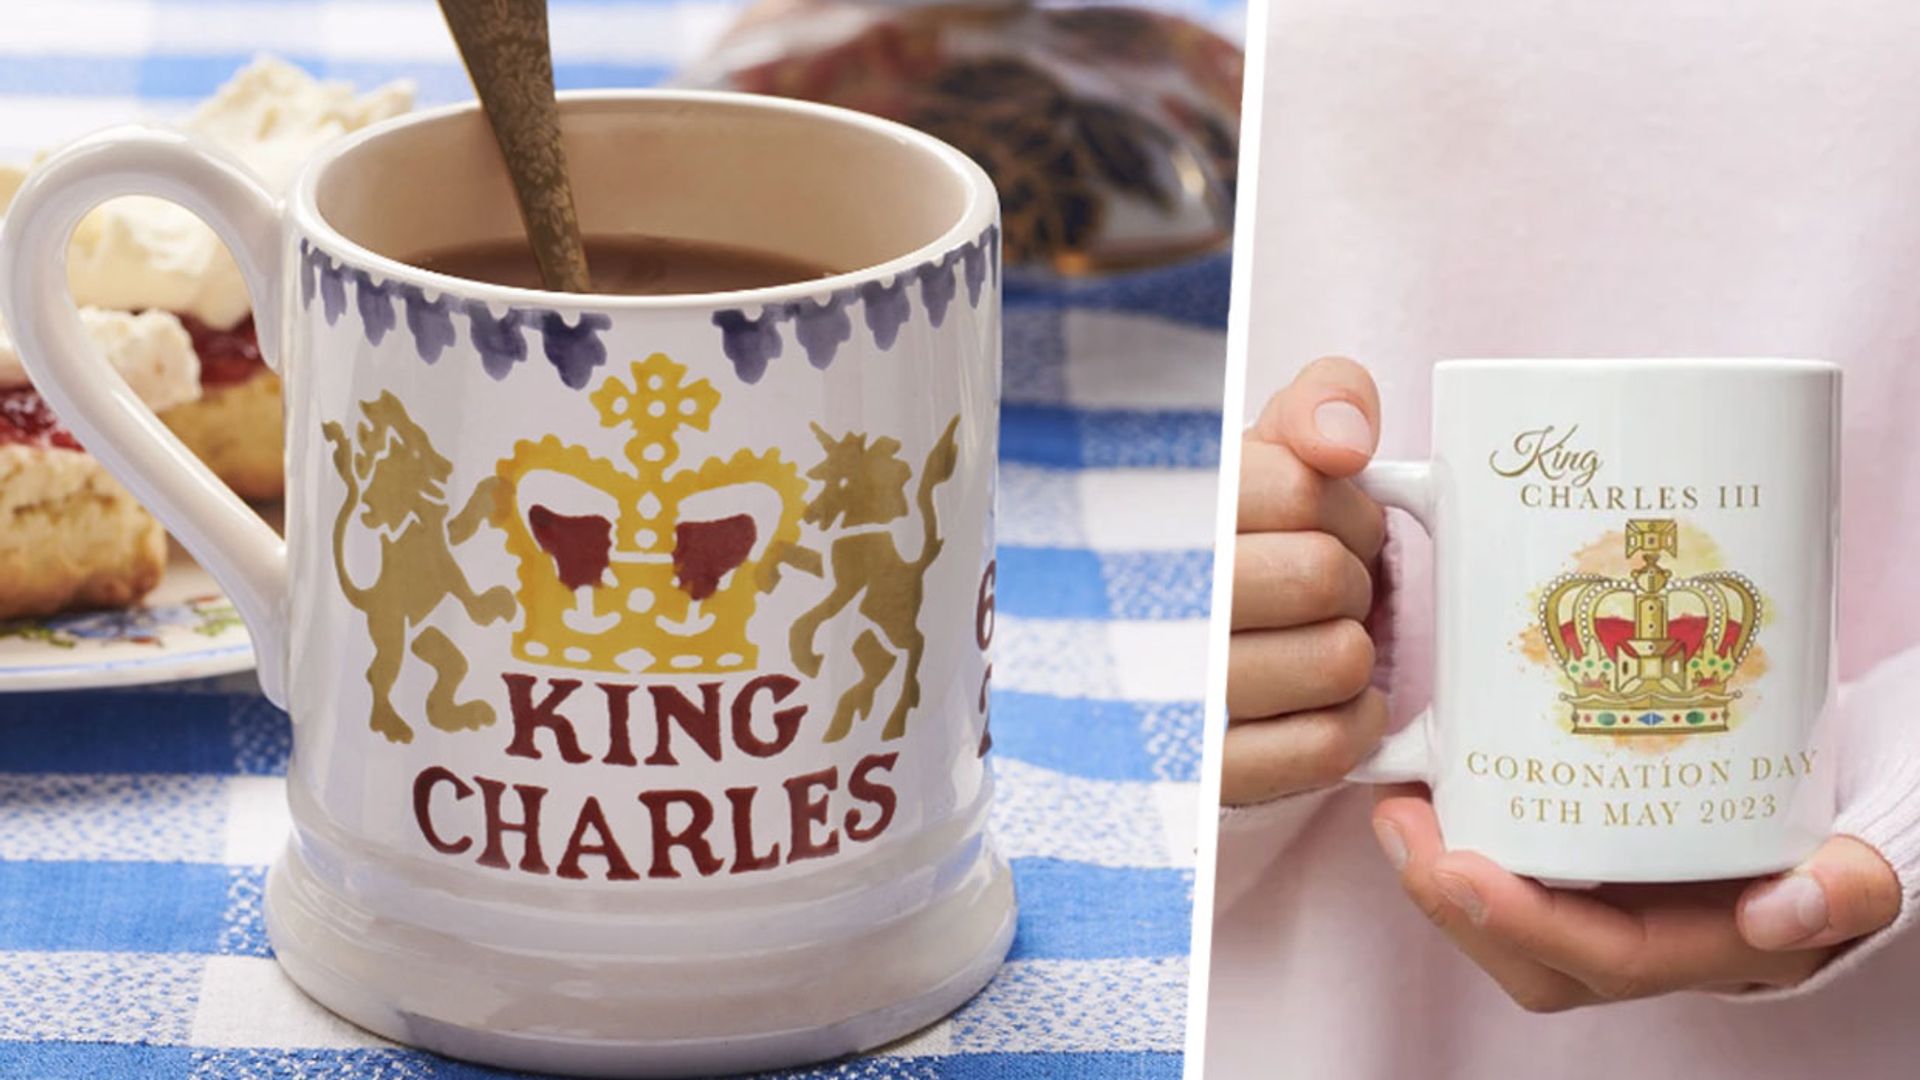 11 keepsake coronation mugs and tea cups to celebrate King Charles III